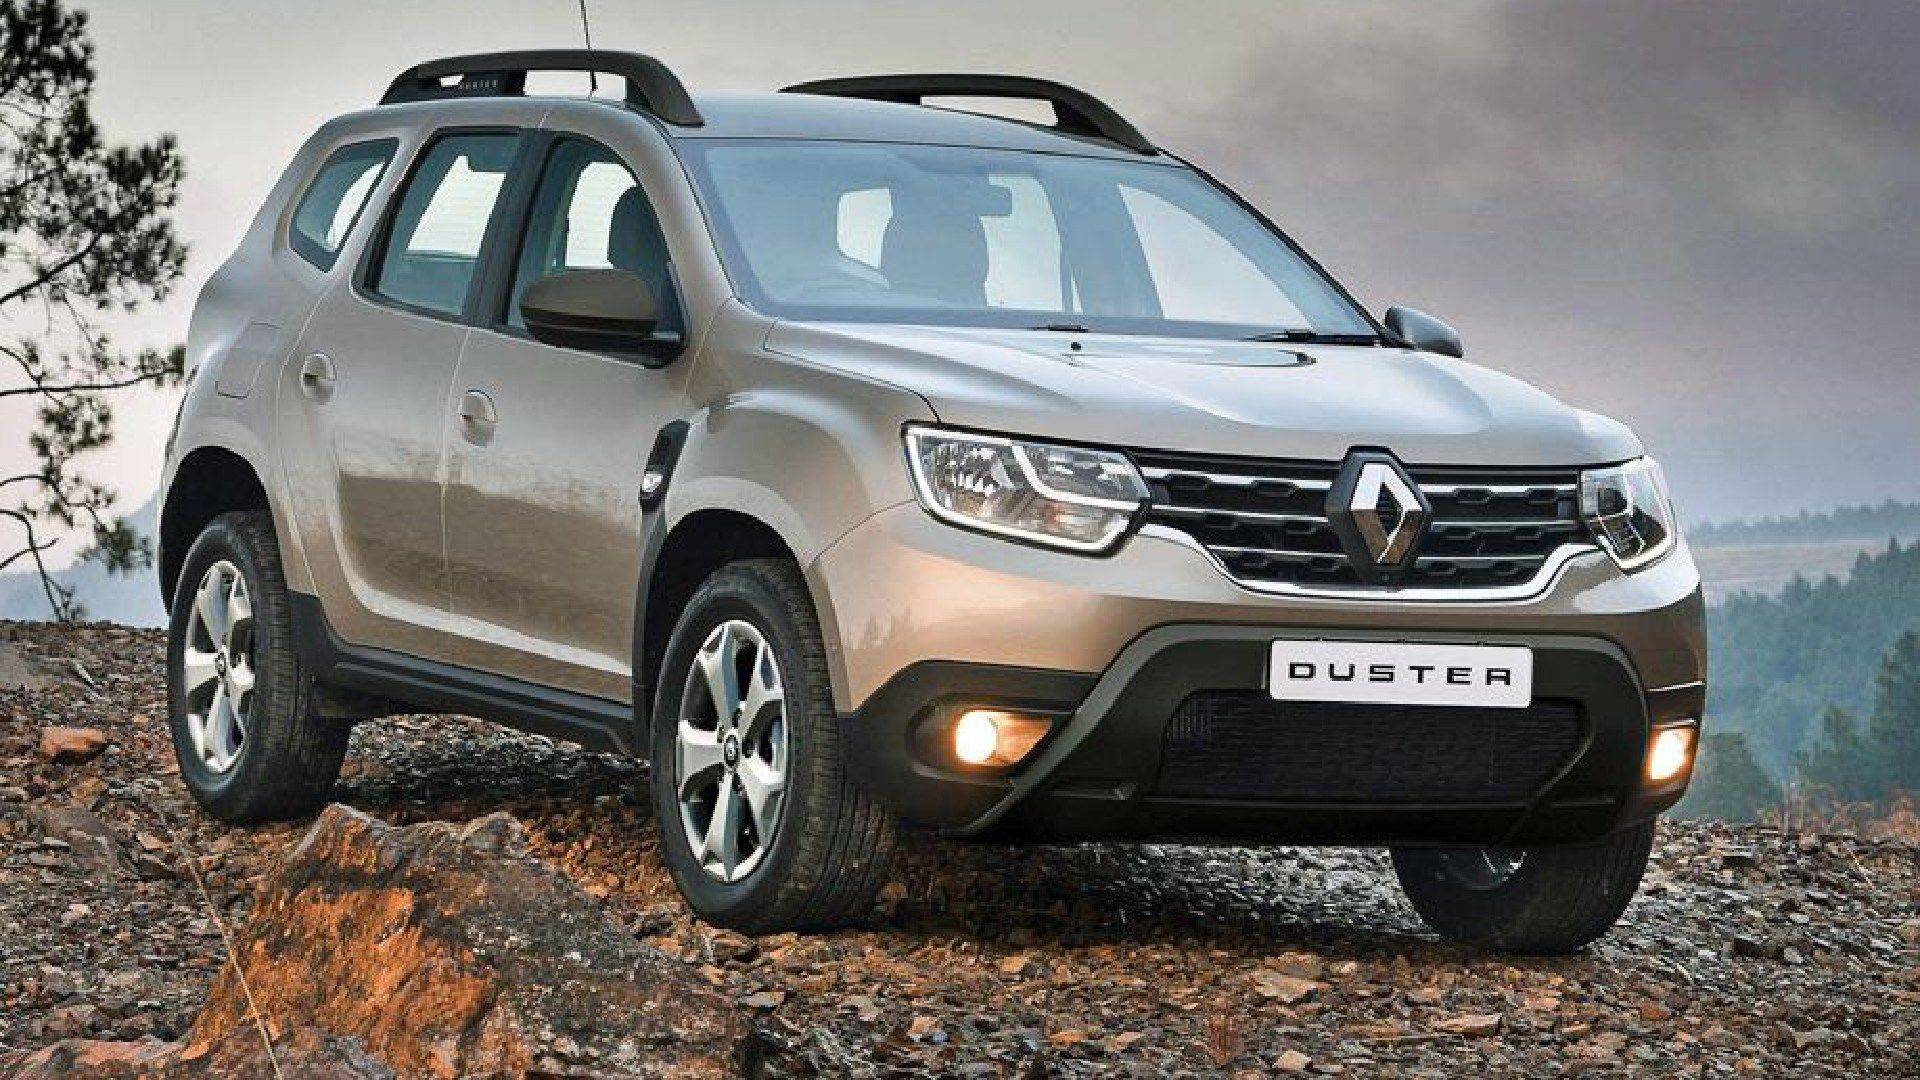 Renault duster 2014